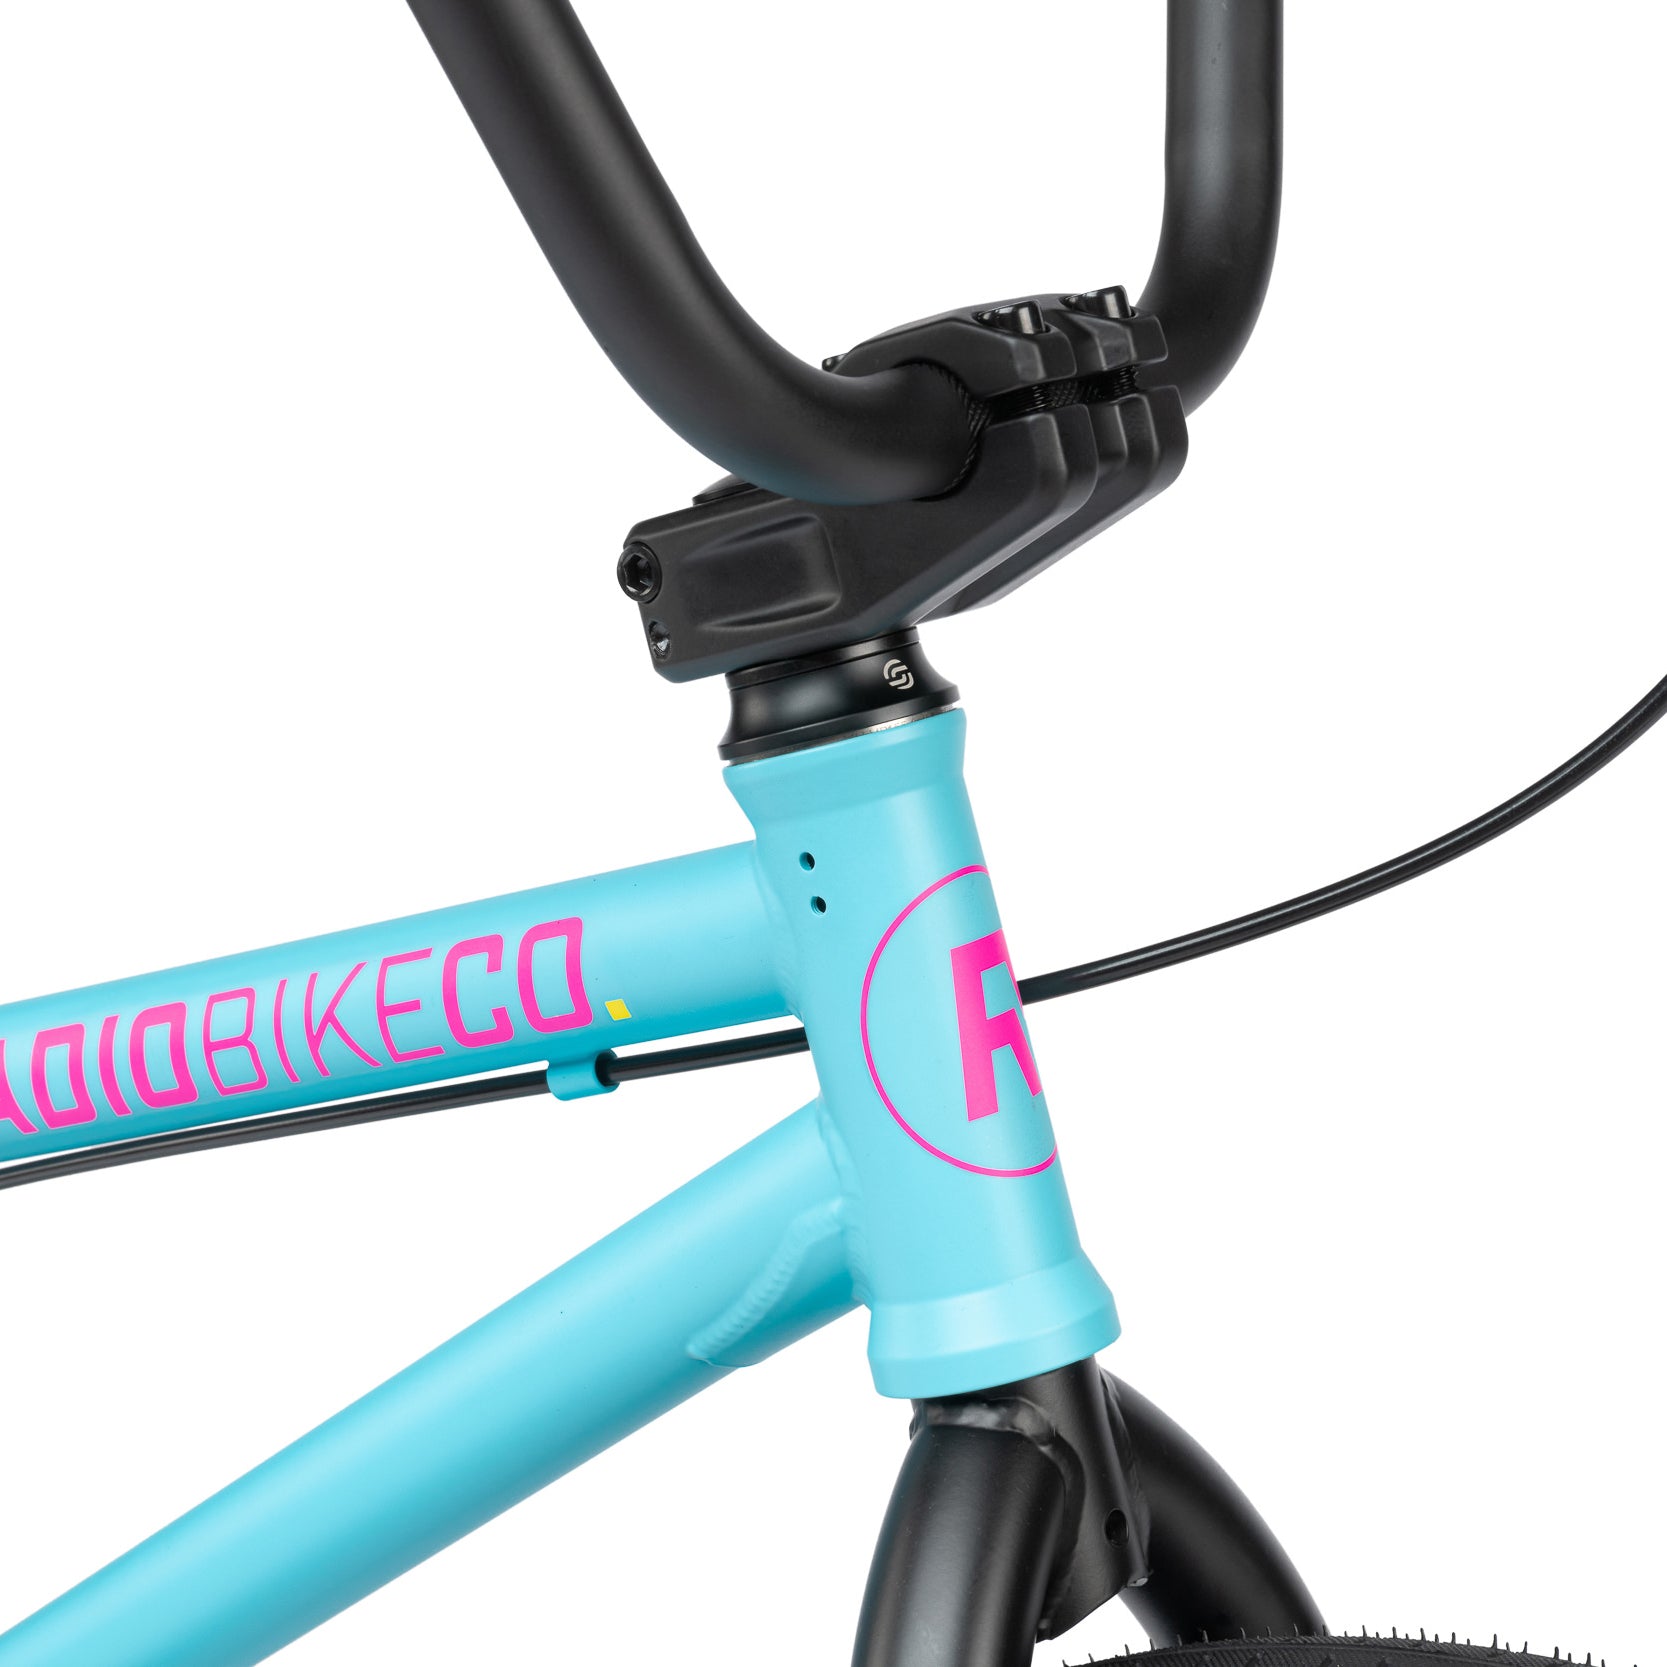 A Radio Evol 20 bike in blue and pink with a pink handlebar.